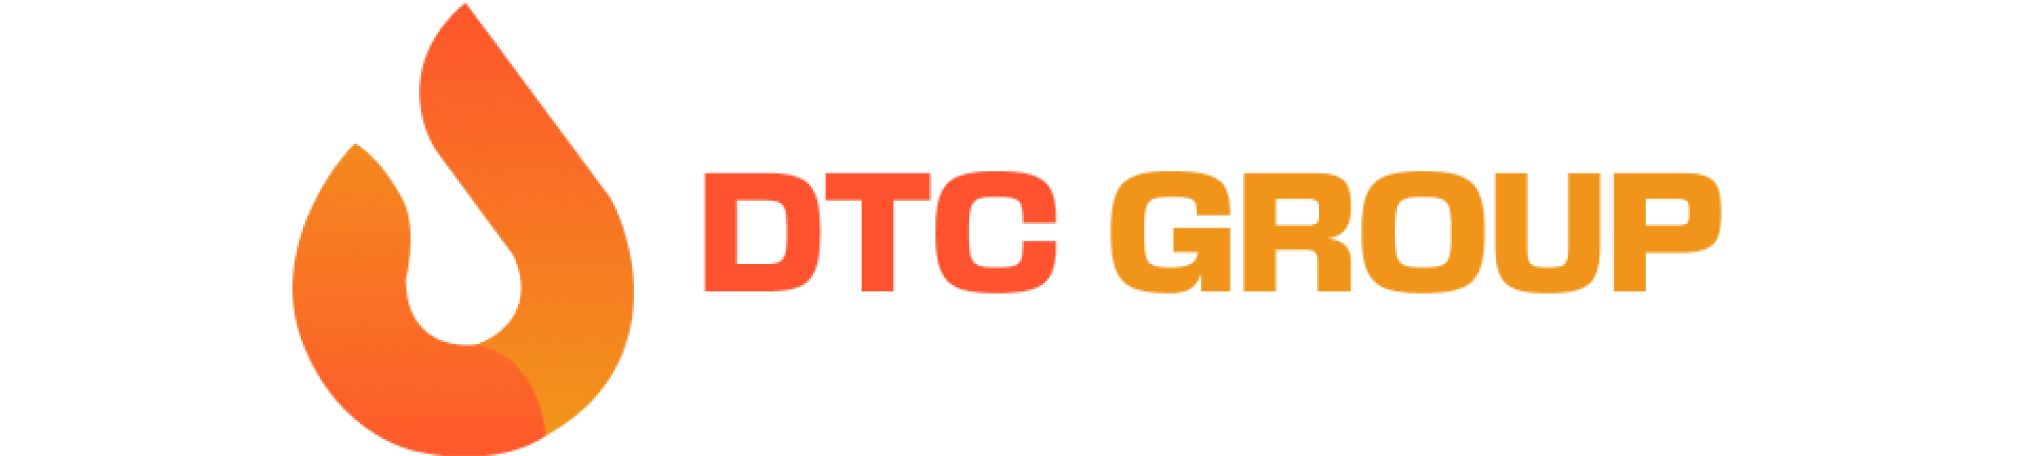 DTC Group